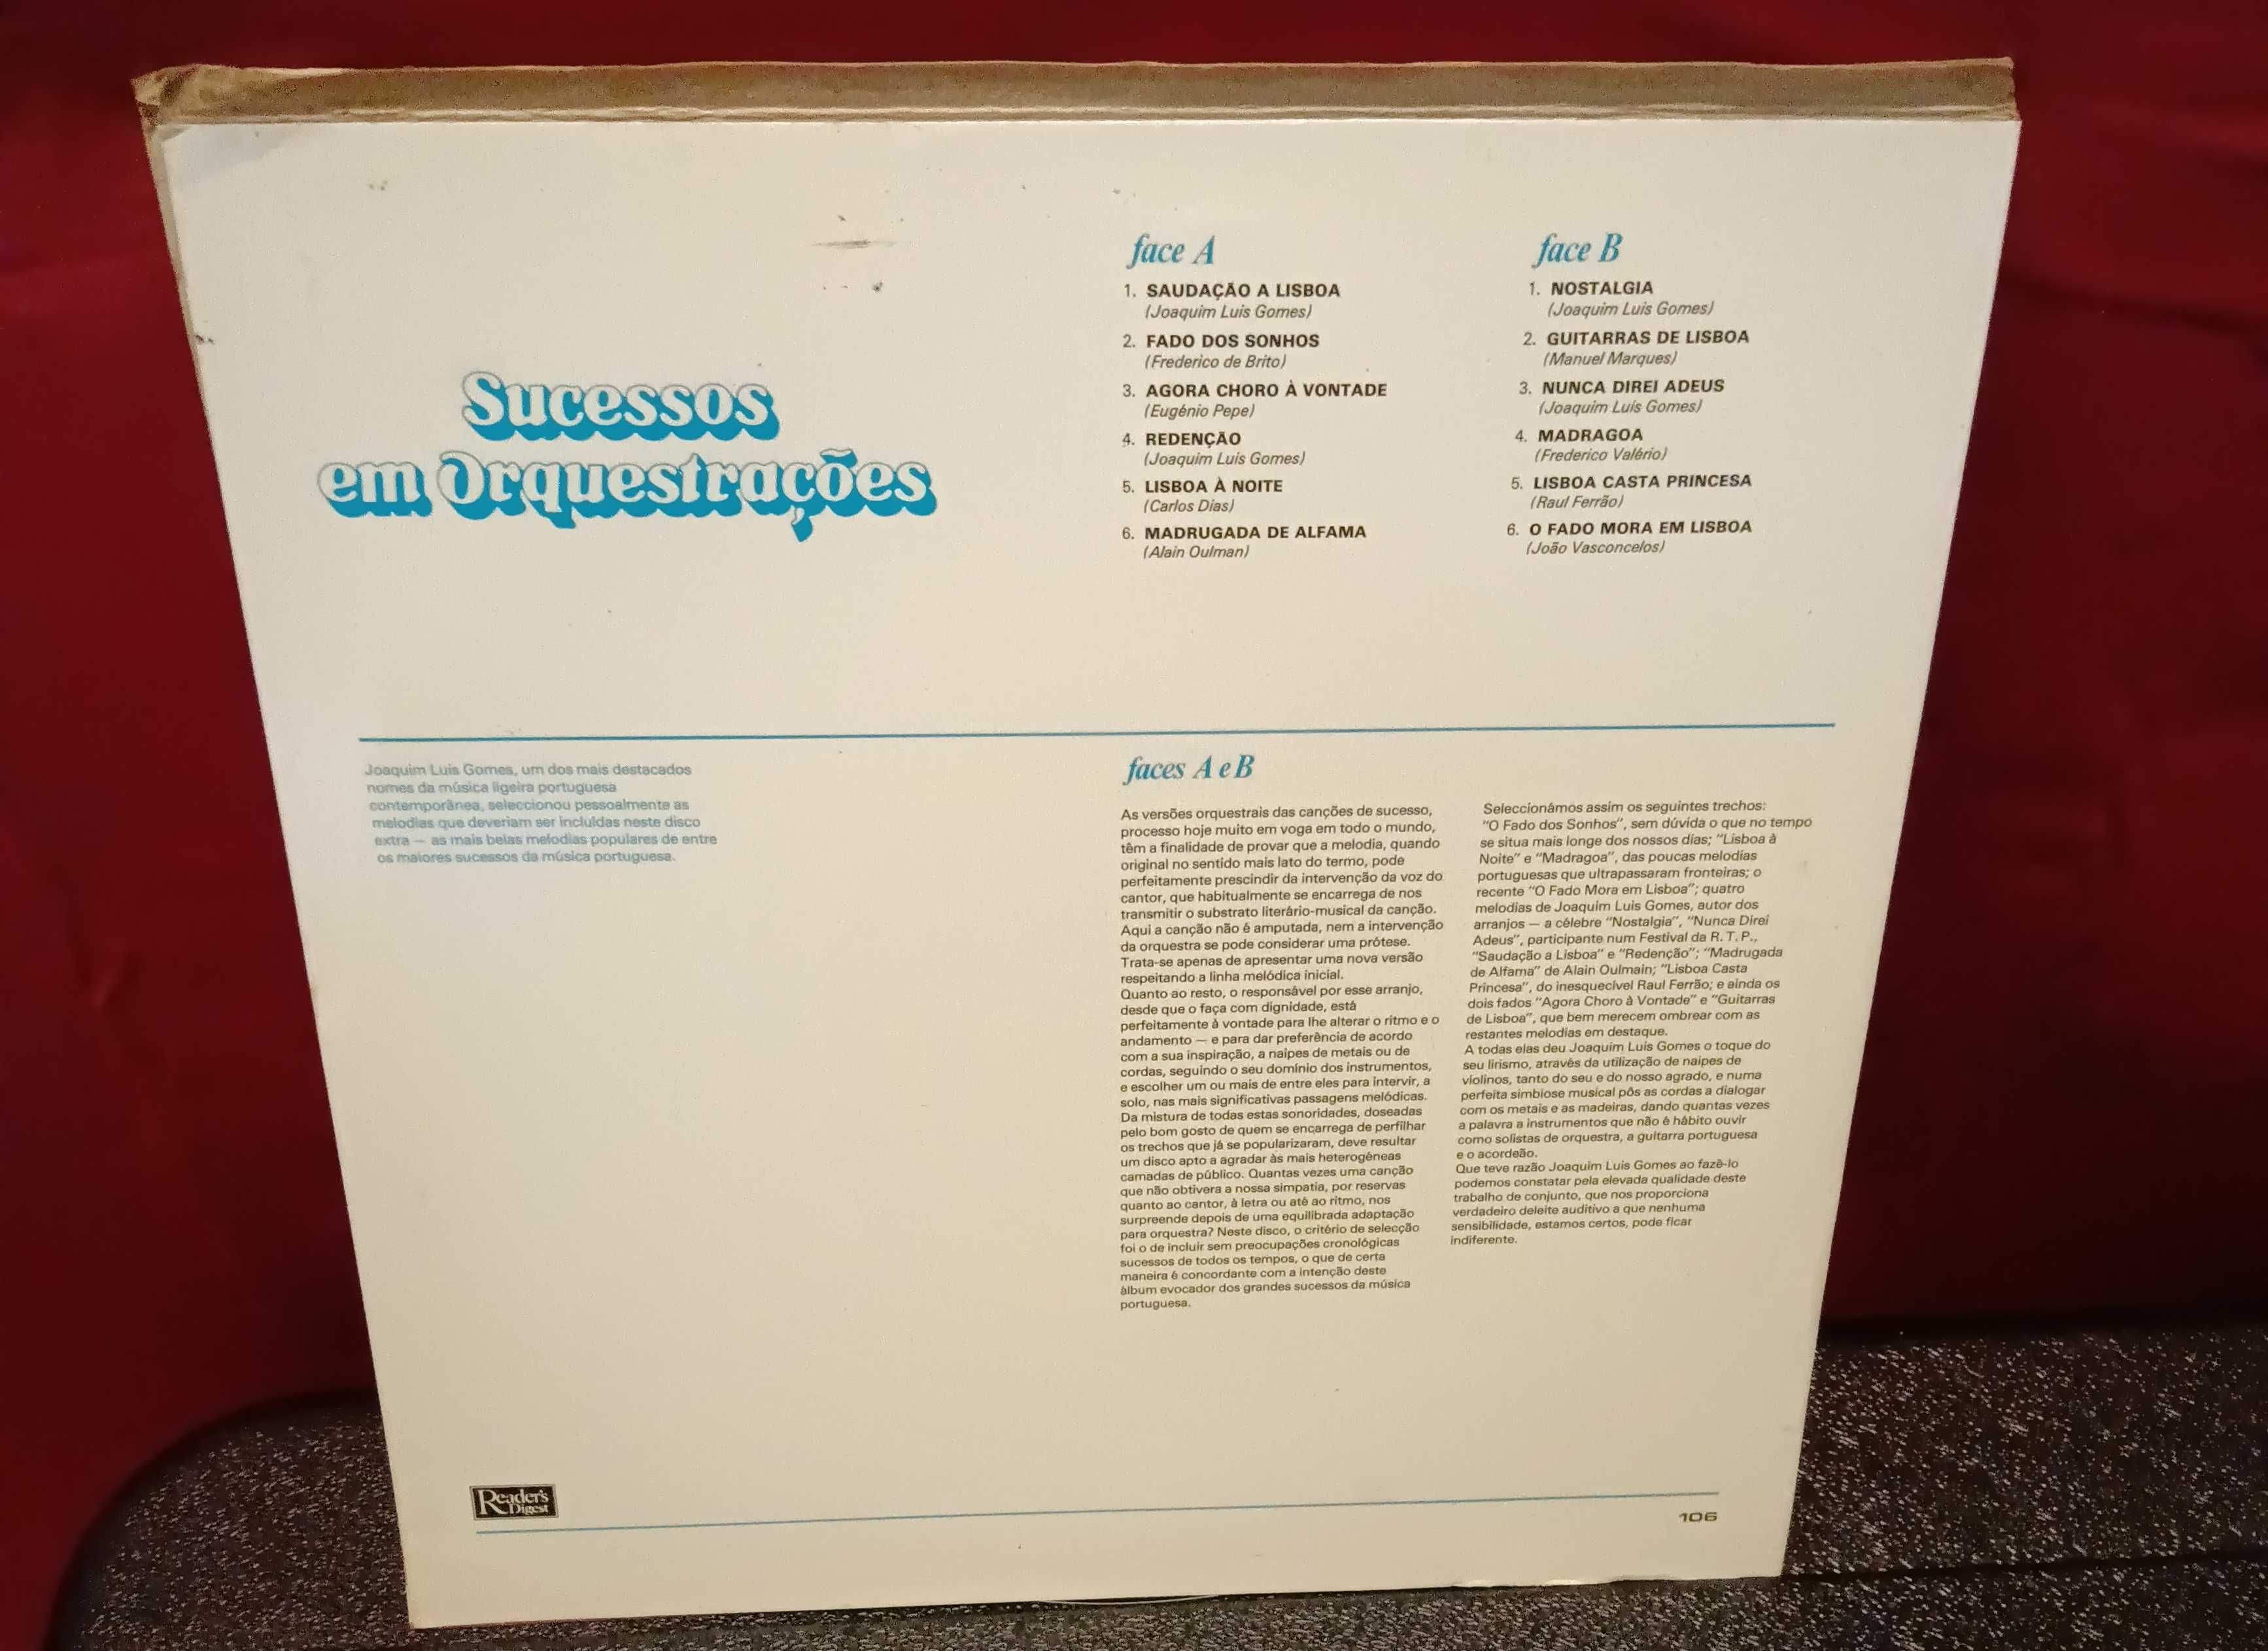 Varios albuns em vinil formato LP